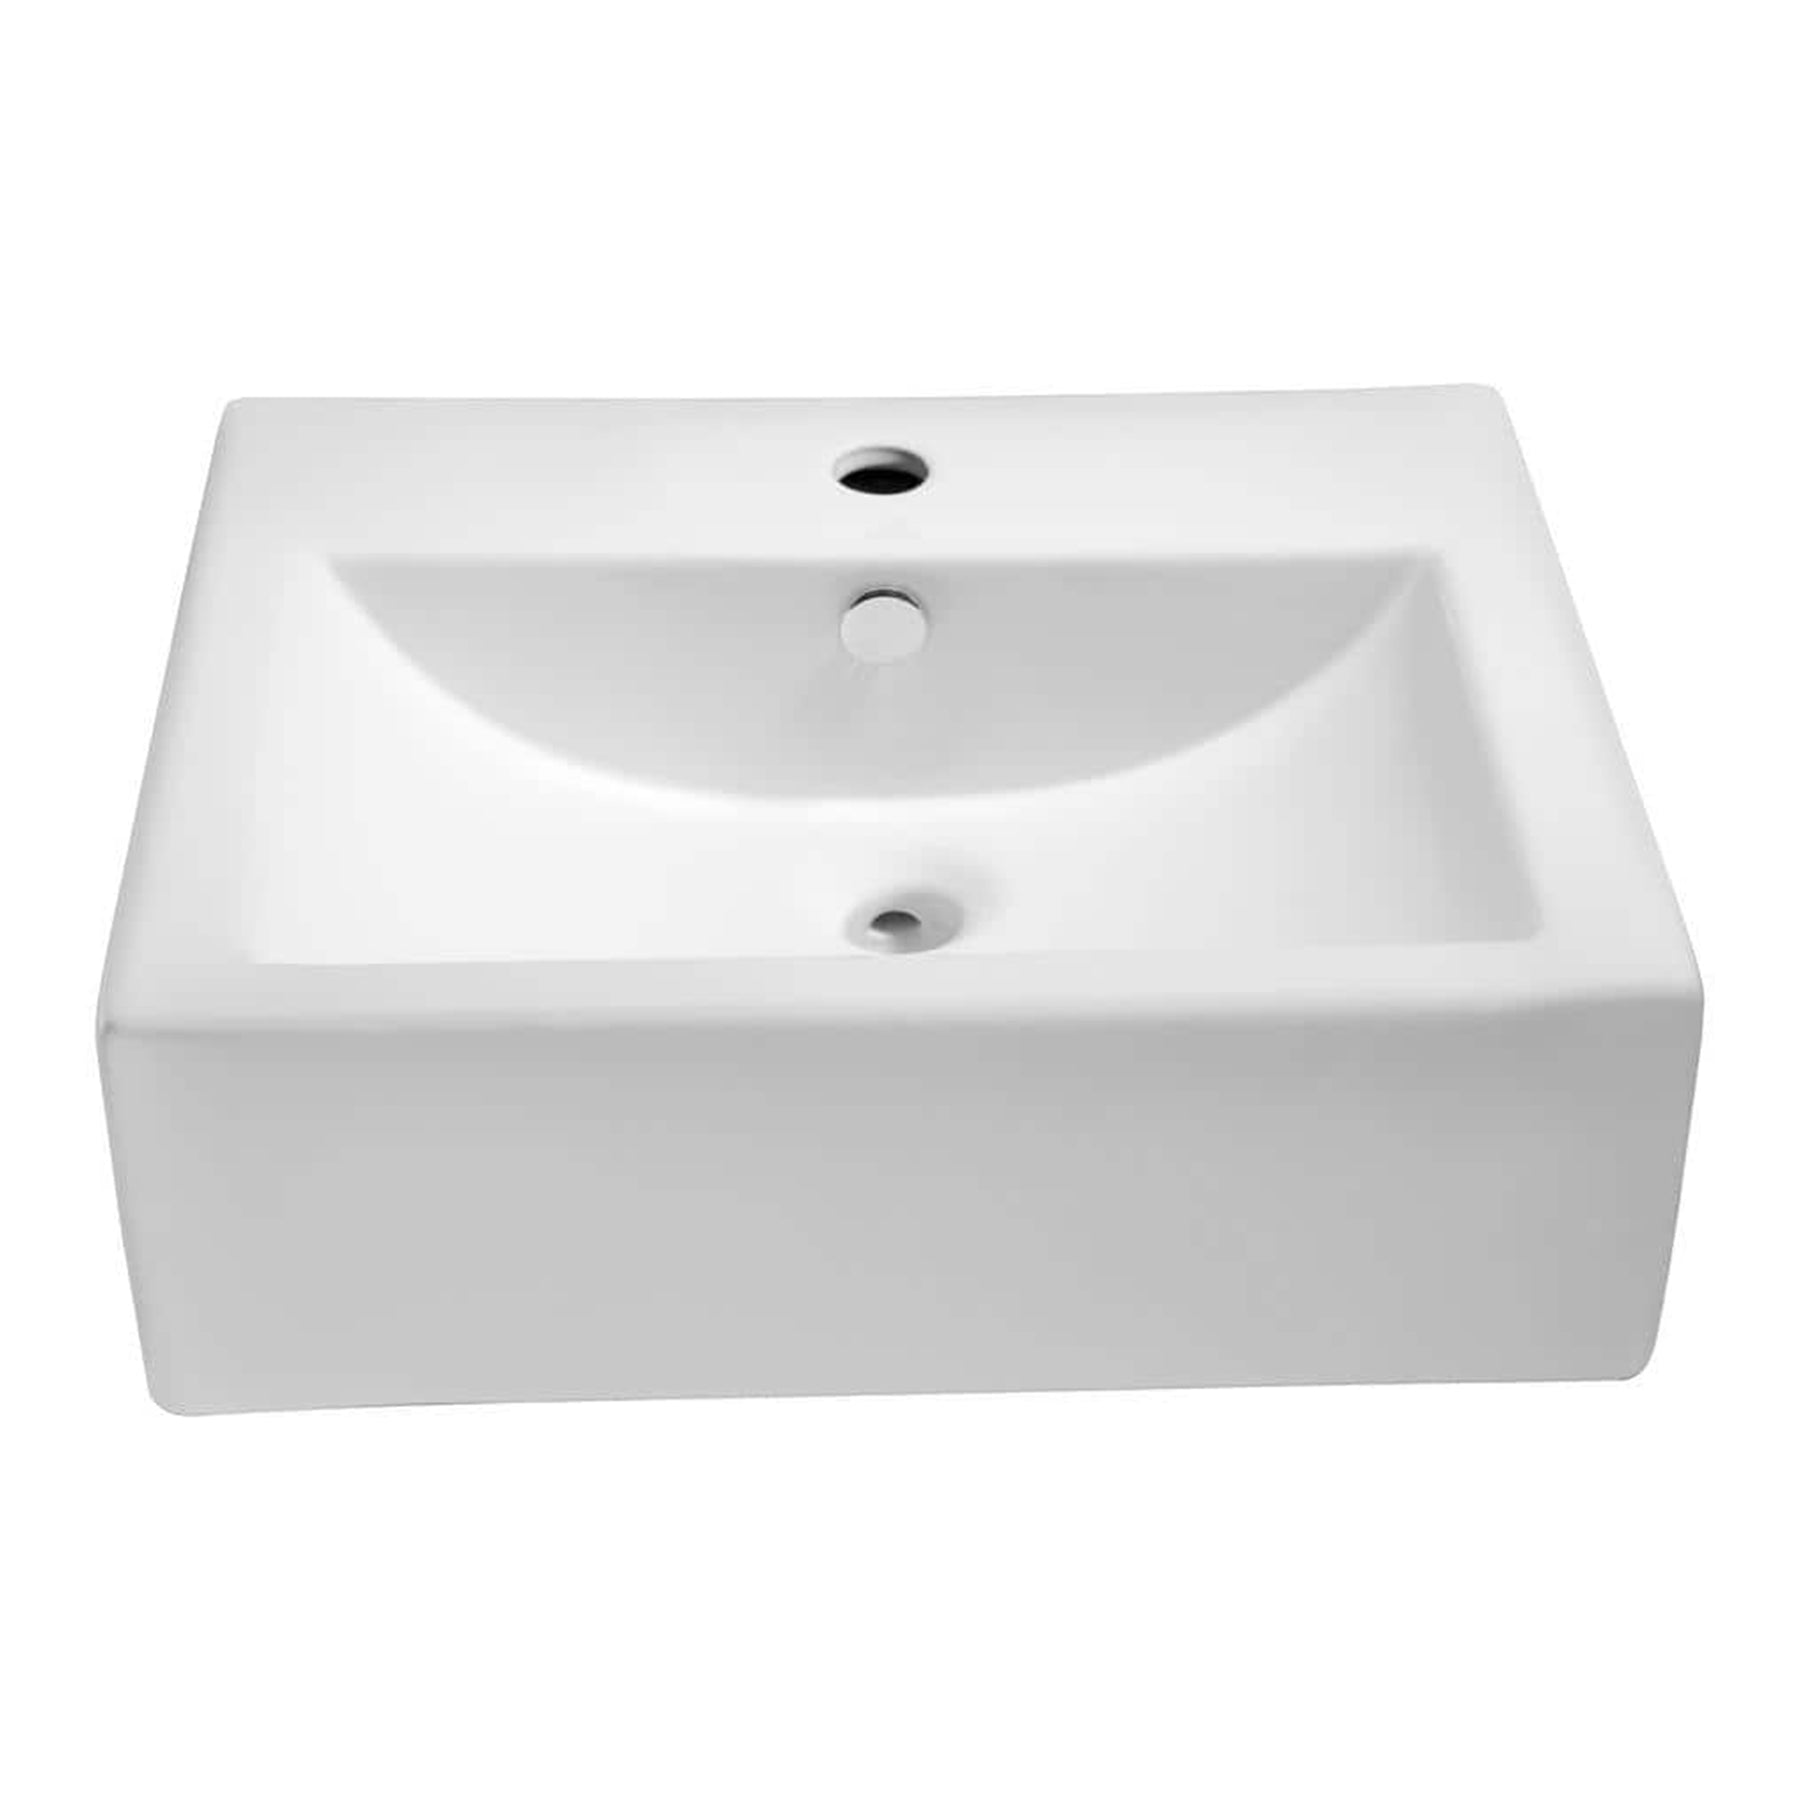 Ceramic Vessel Sink in White - Vitruviu Series Deco